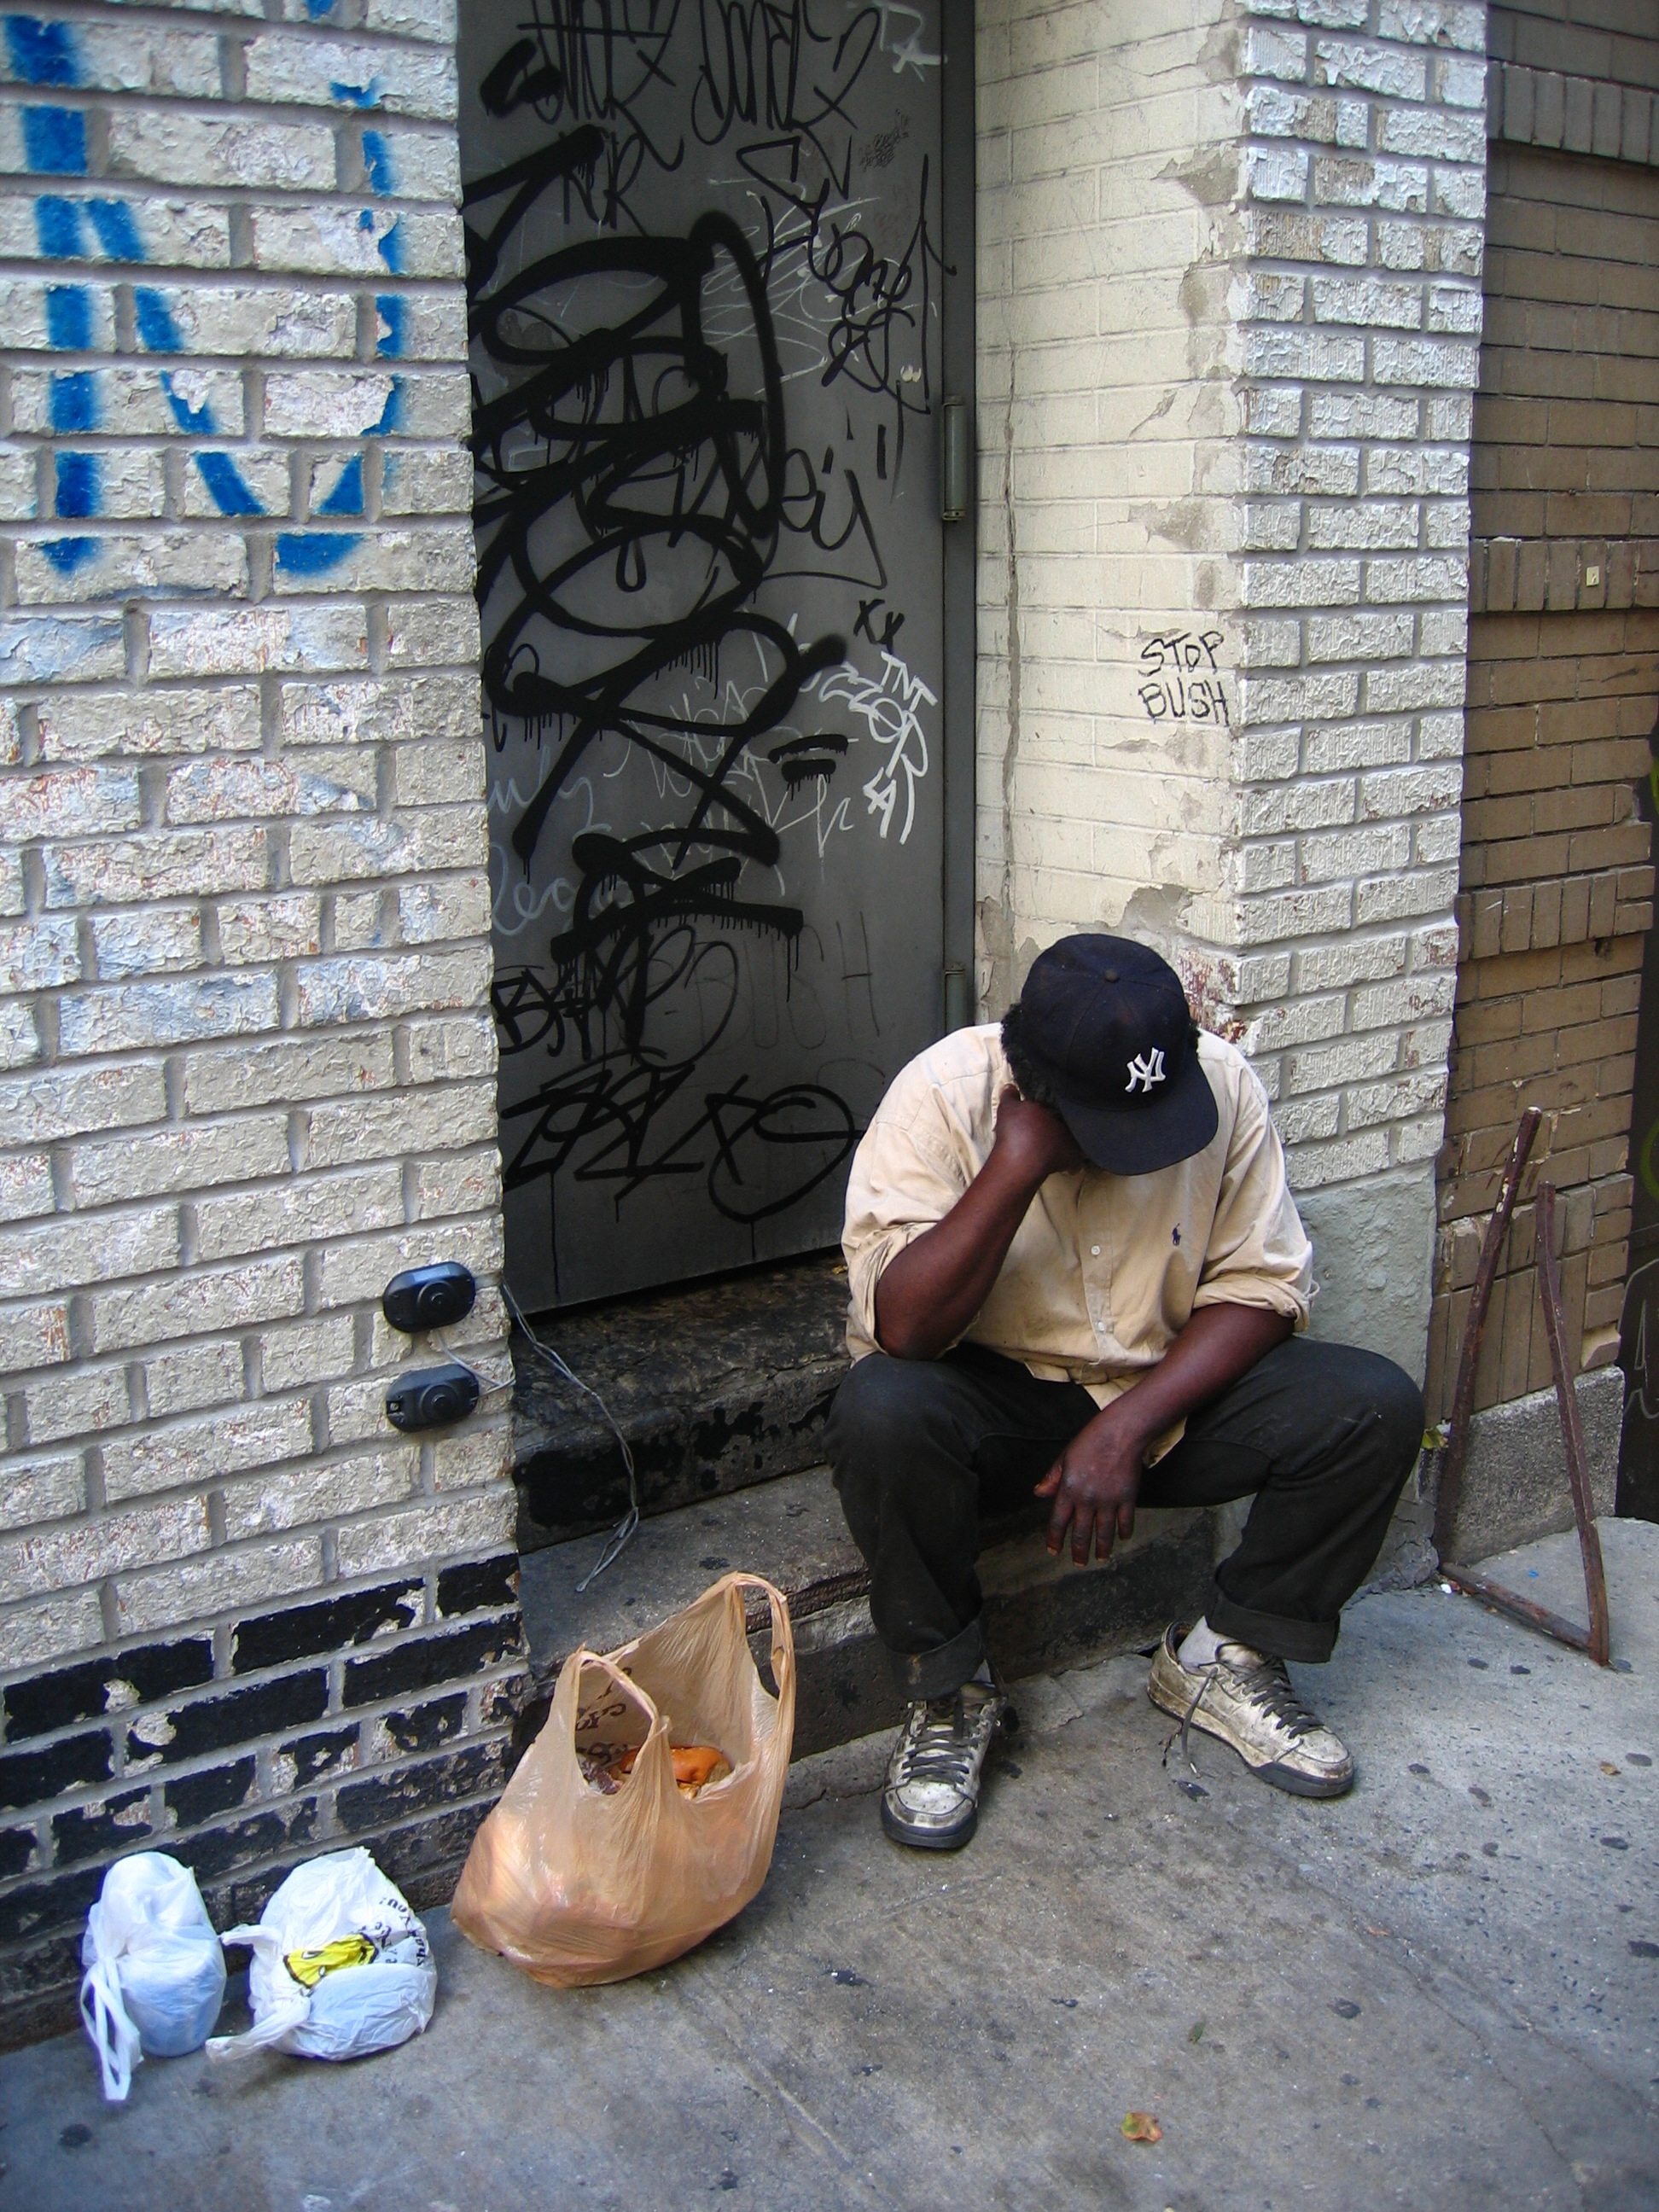 Homeless in New York. (Lujoma via Wikimedia Commons)